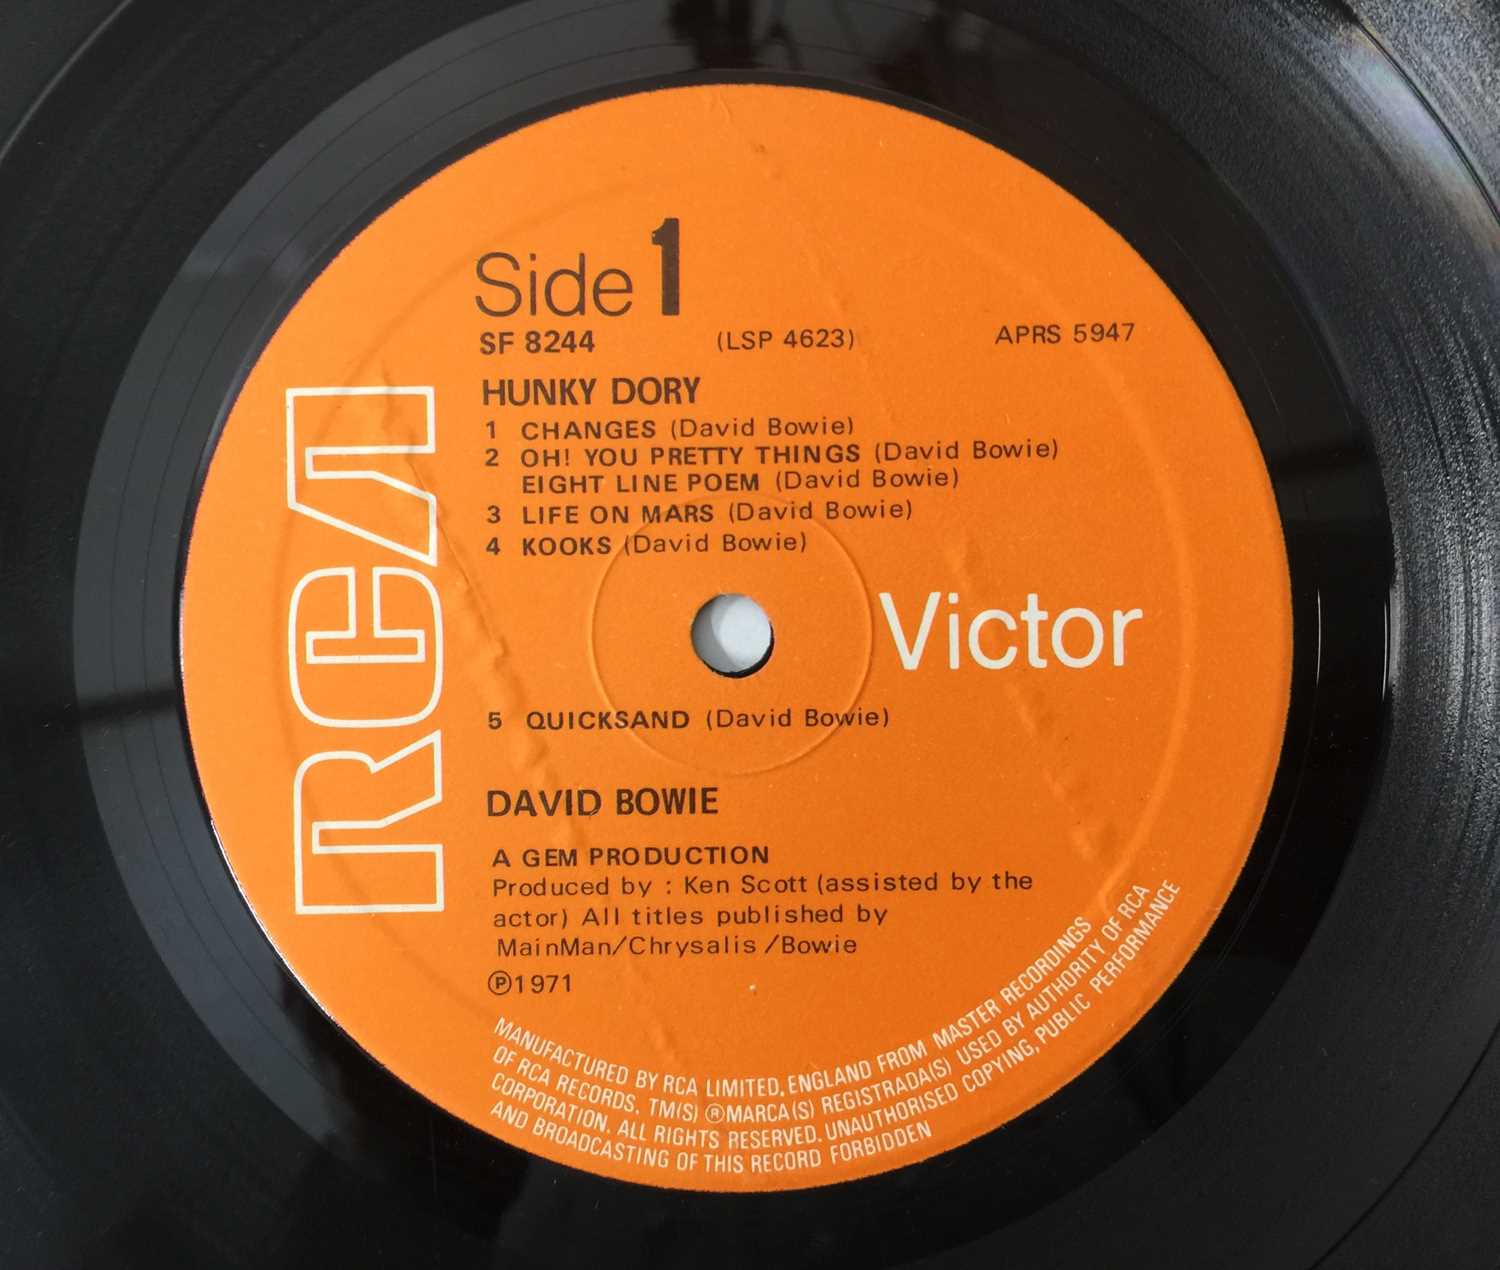 DAVID BOWIE - HUNKY DORY LP (ORIGINAL UK FRONT LAMINATED PRESSING - RCA VICTOR SF 8244 - NO GEM SLEE - Image 5 of 8